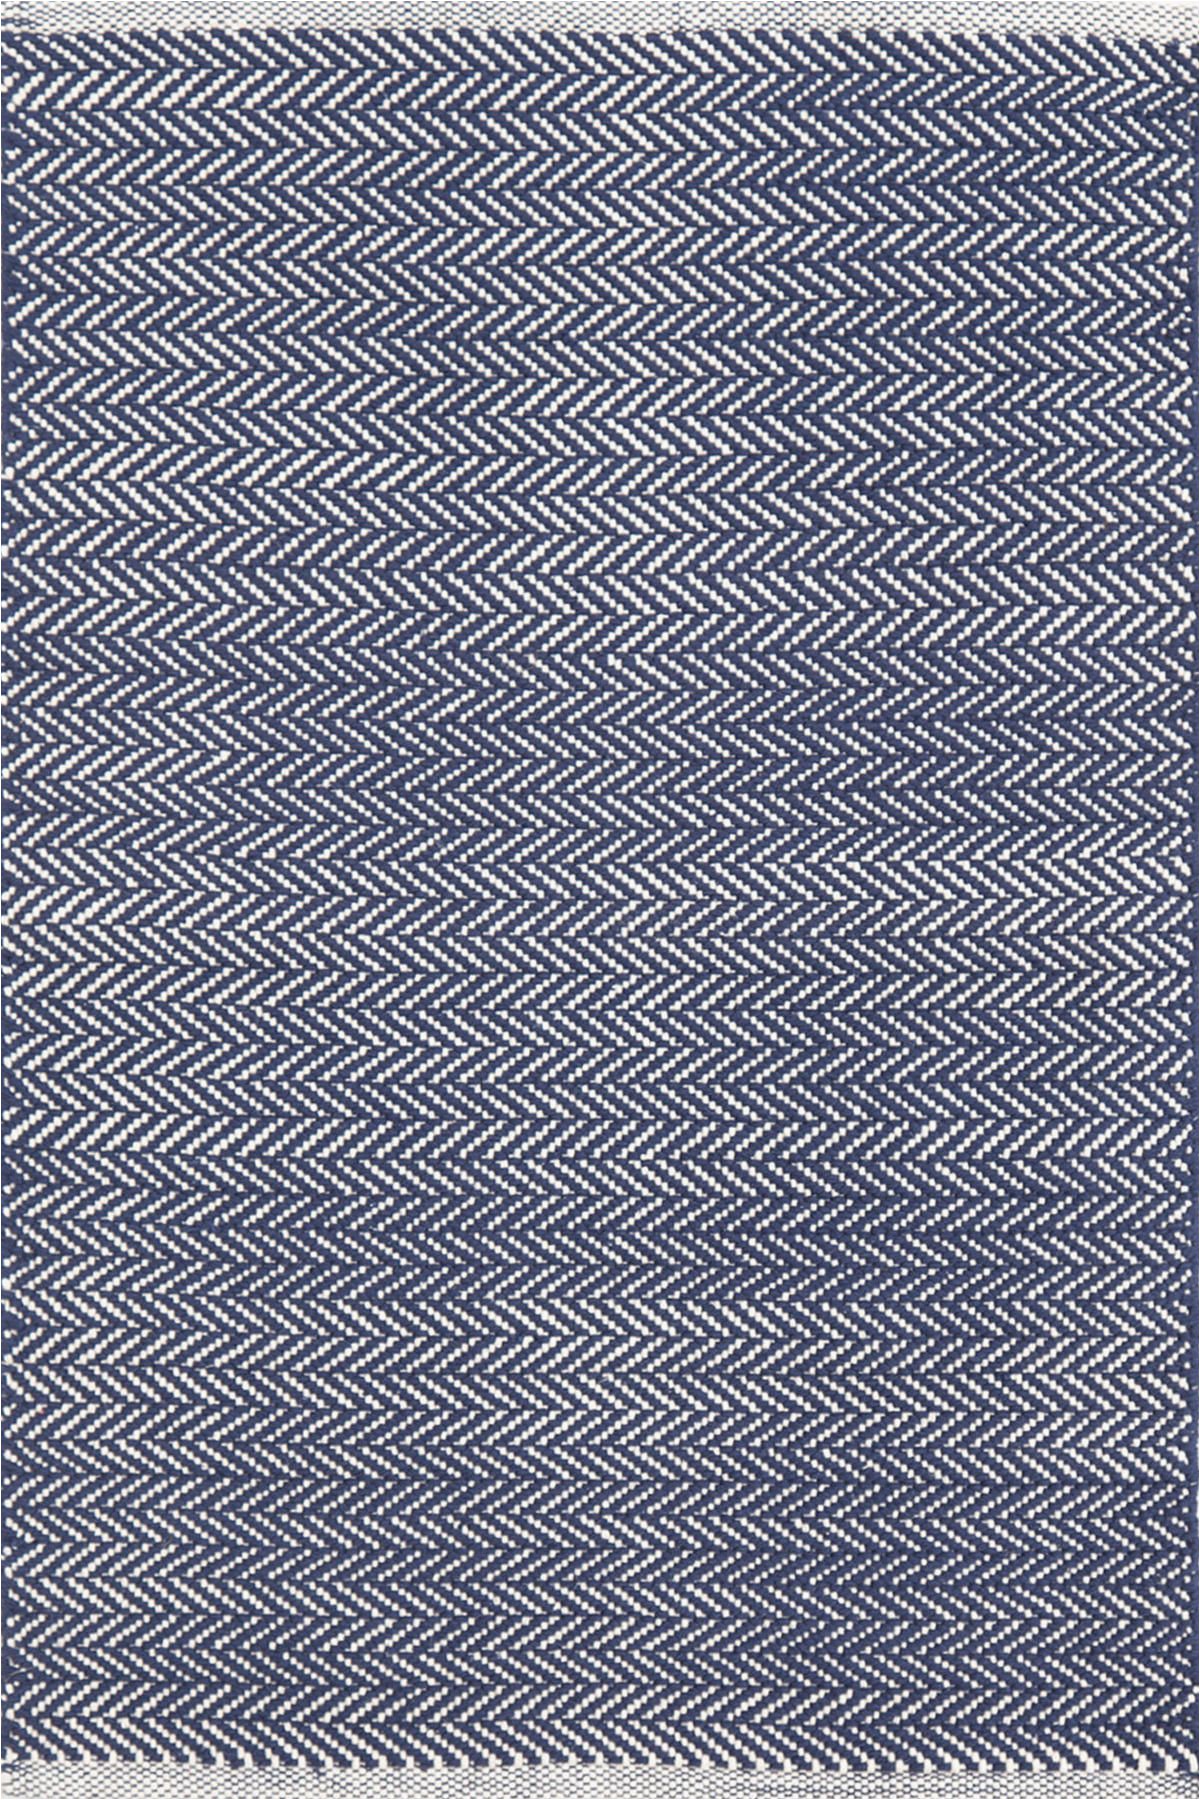 Navy Blue Herringbone Rug Herringbone Indigo Woven Cotton Rug